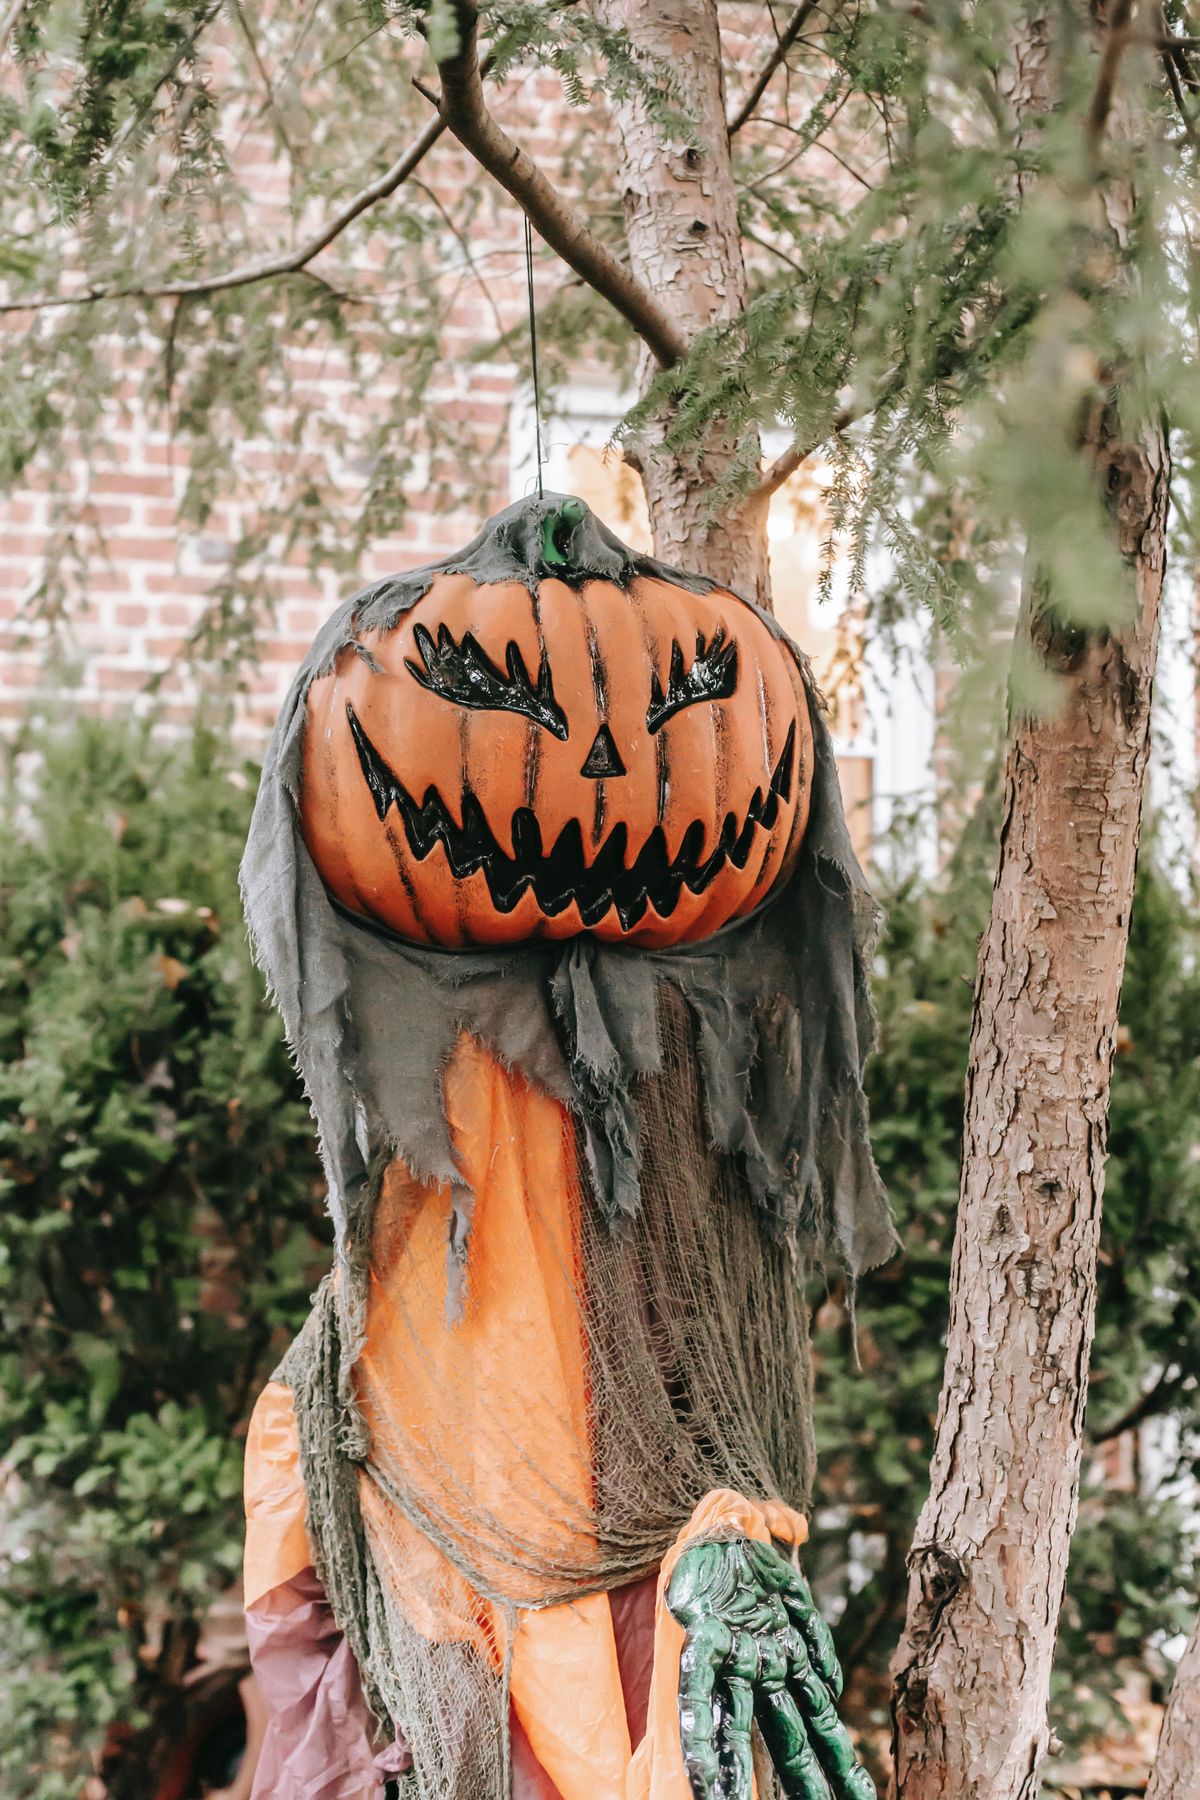 A scarecrow with a pumpkin head.